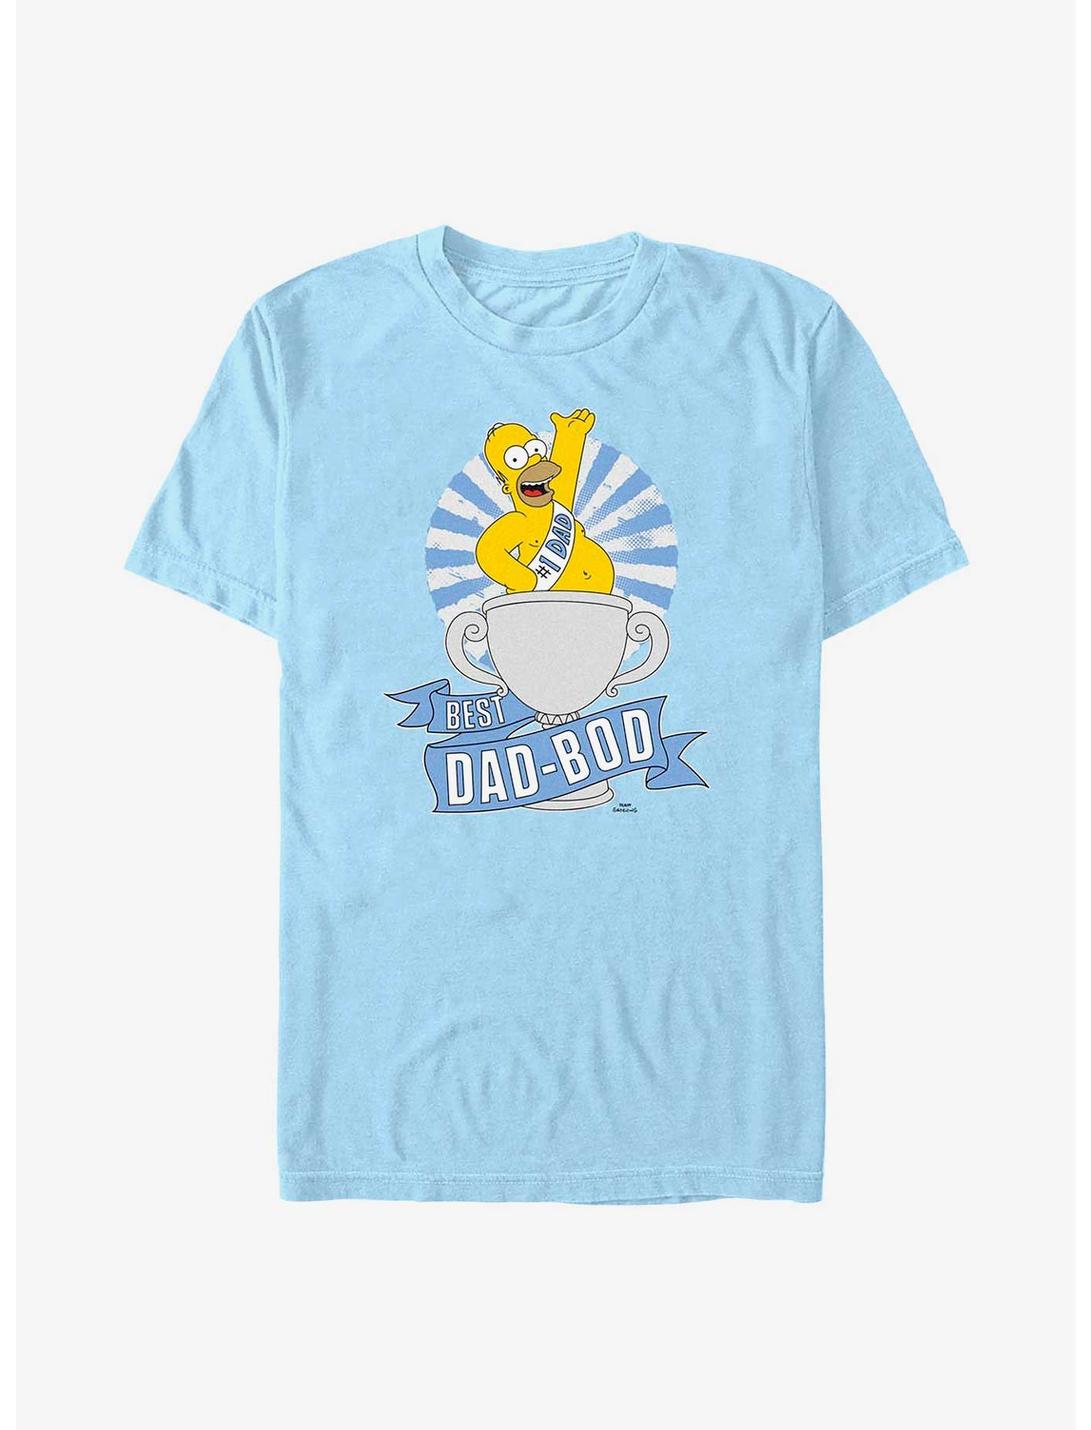 The Simpsons Homer Best Dad-Bod T-Shirt, LT BLUE, hi-res